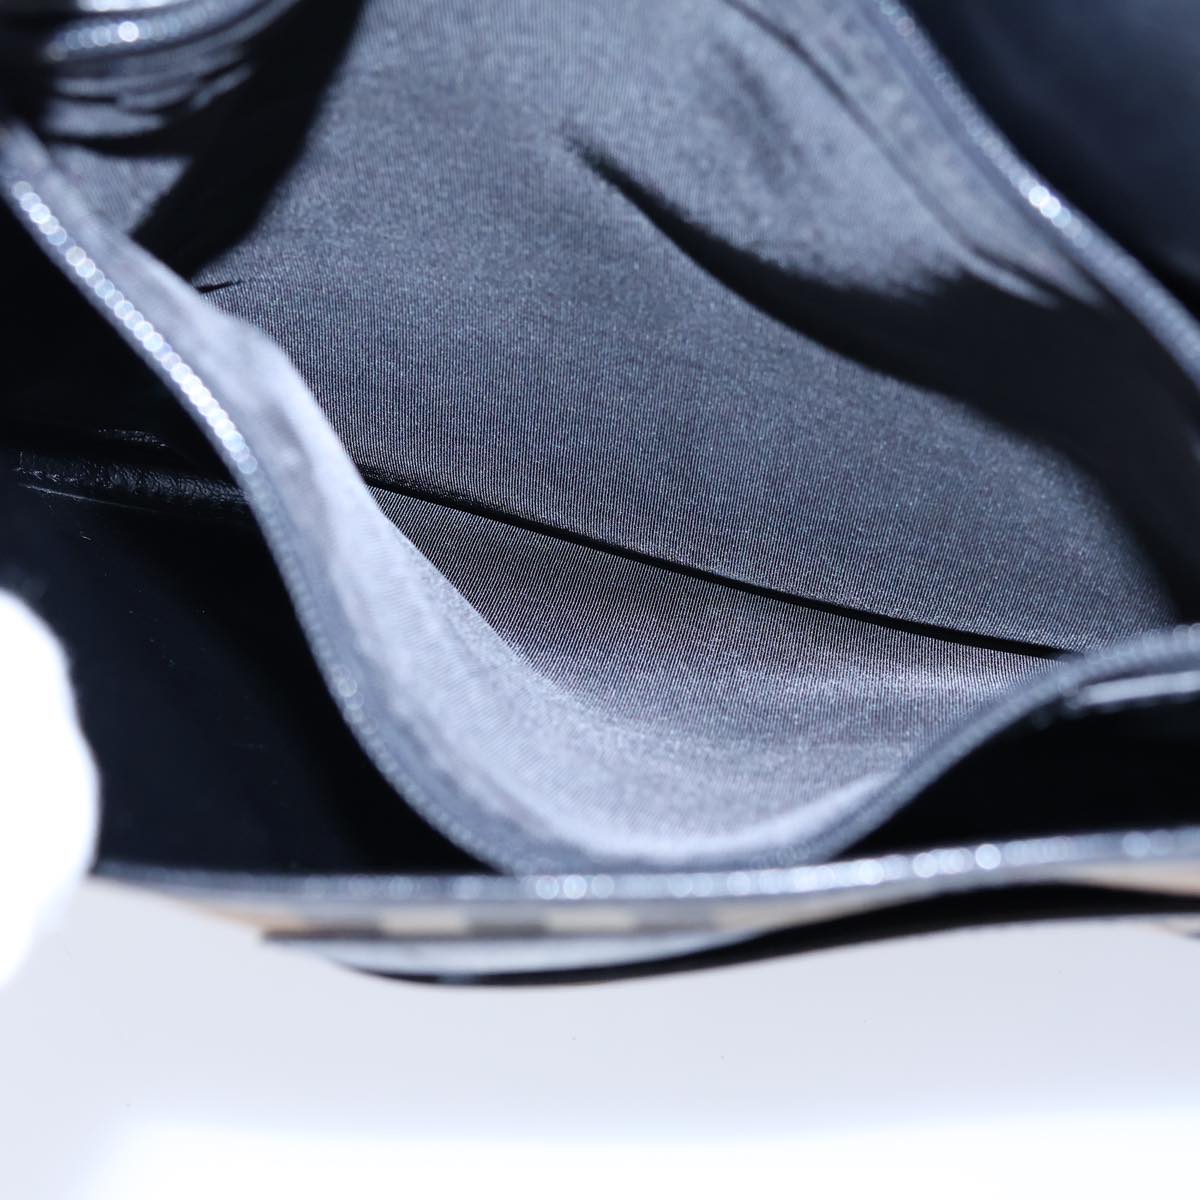 Burberrys Nova Check Shoulder Bag Canvas Beige Auth ki4382